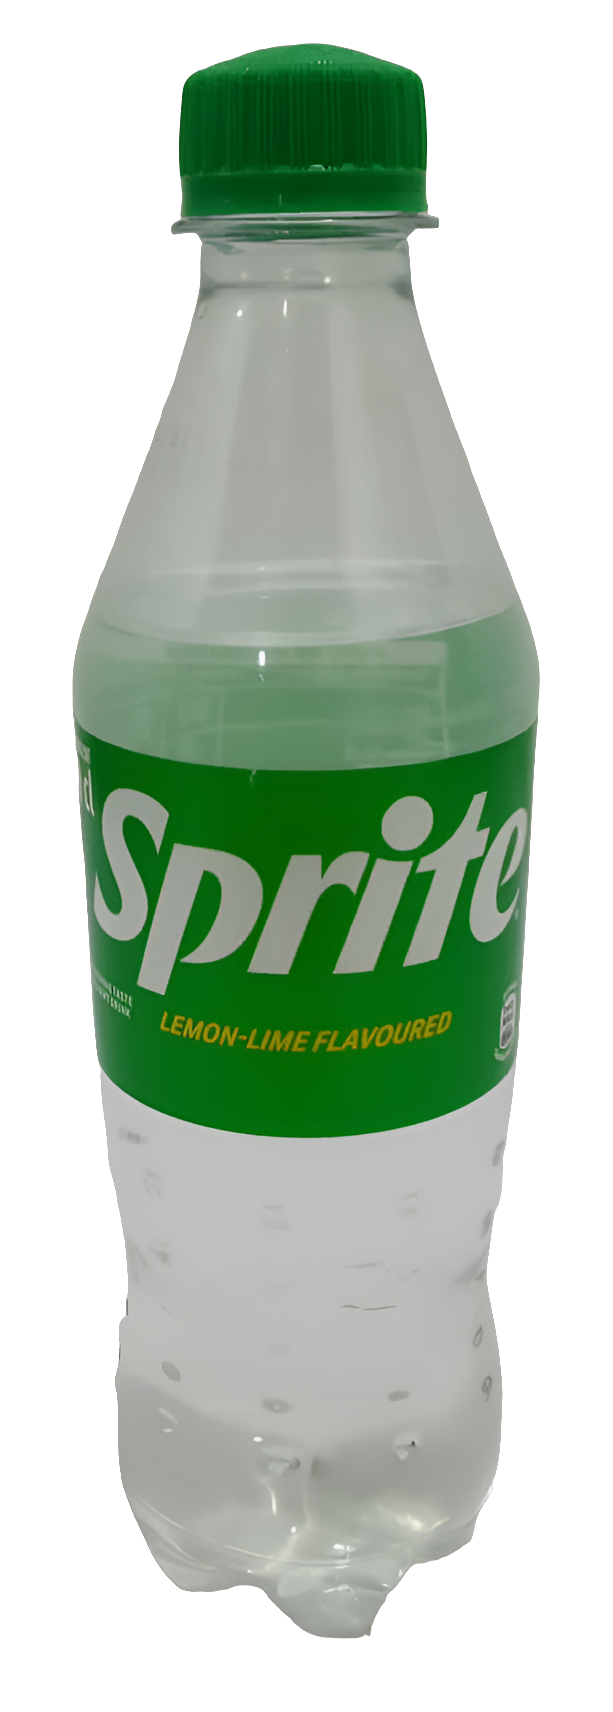 Sprite Lemon-Lime Flavoured Drink, | WTE1a